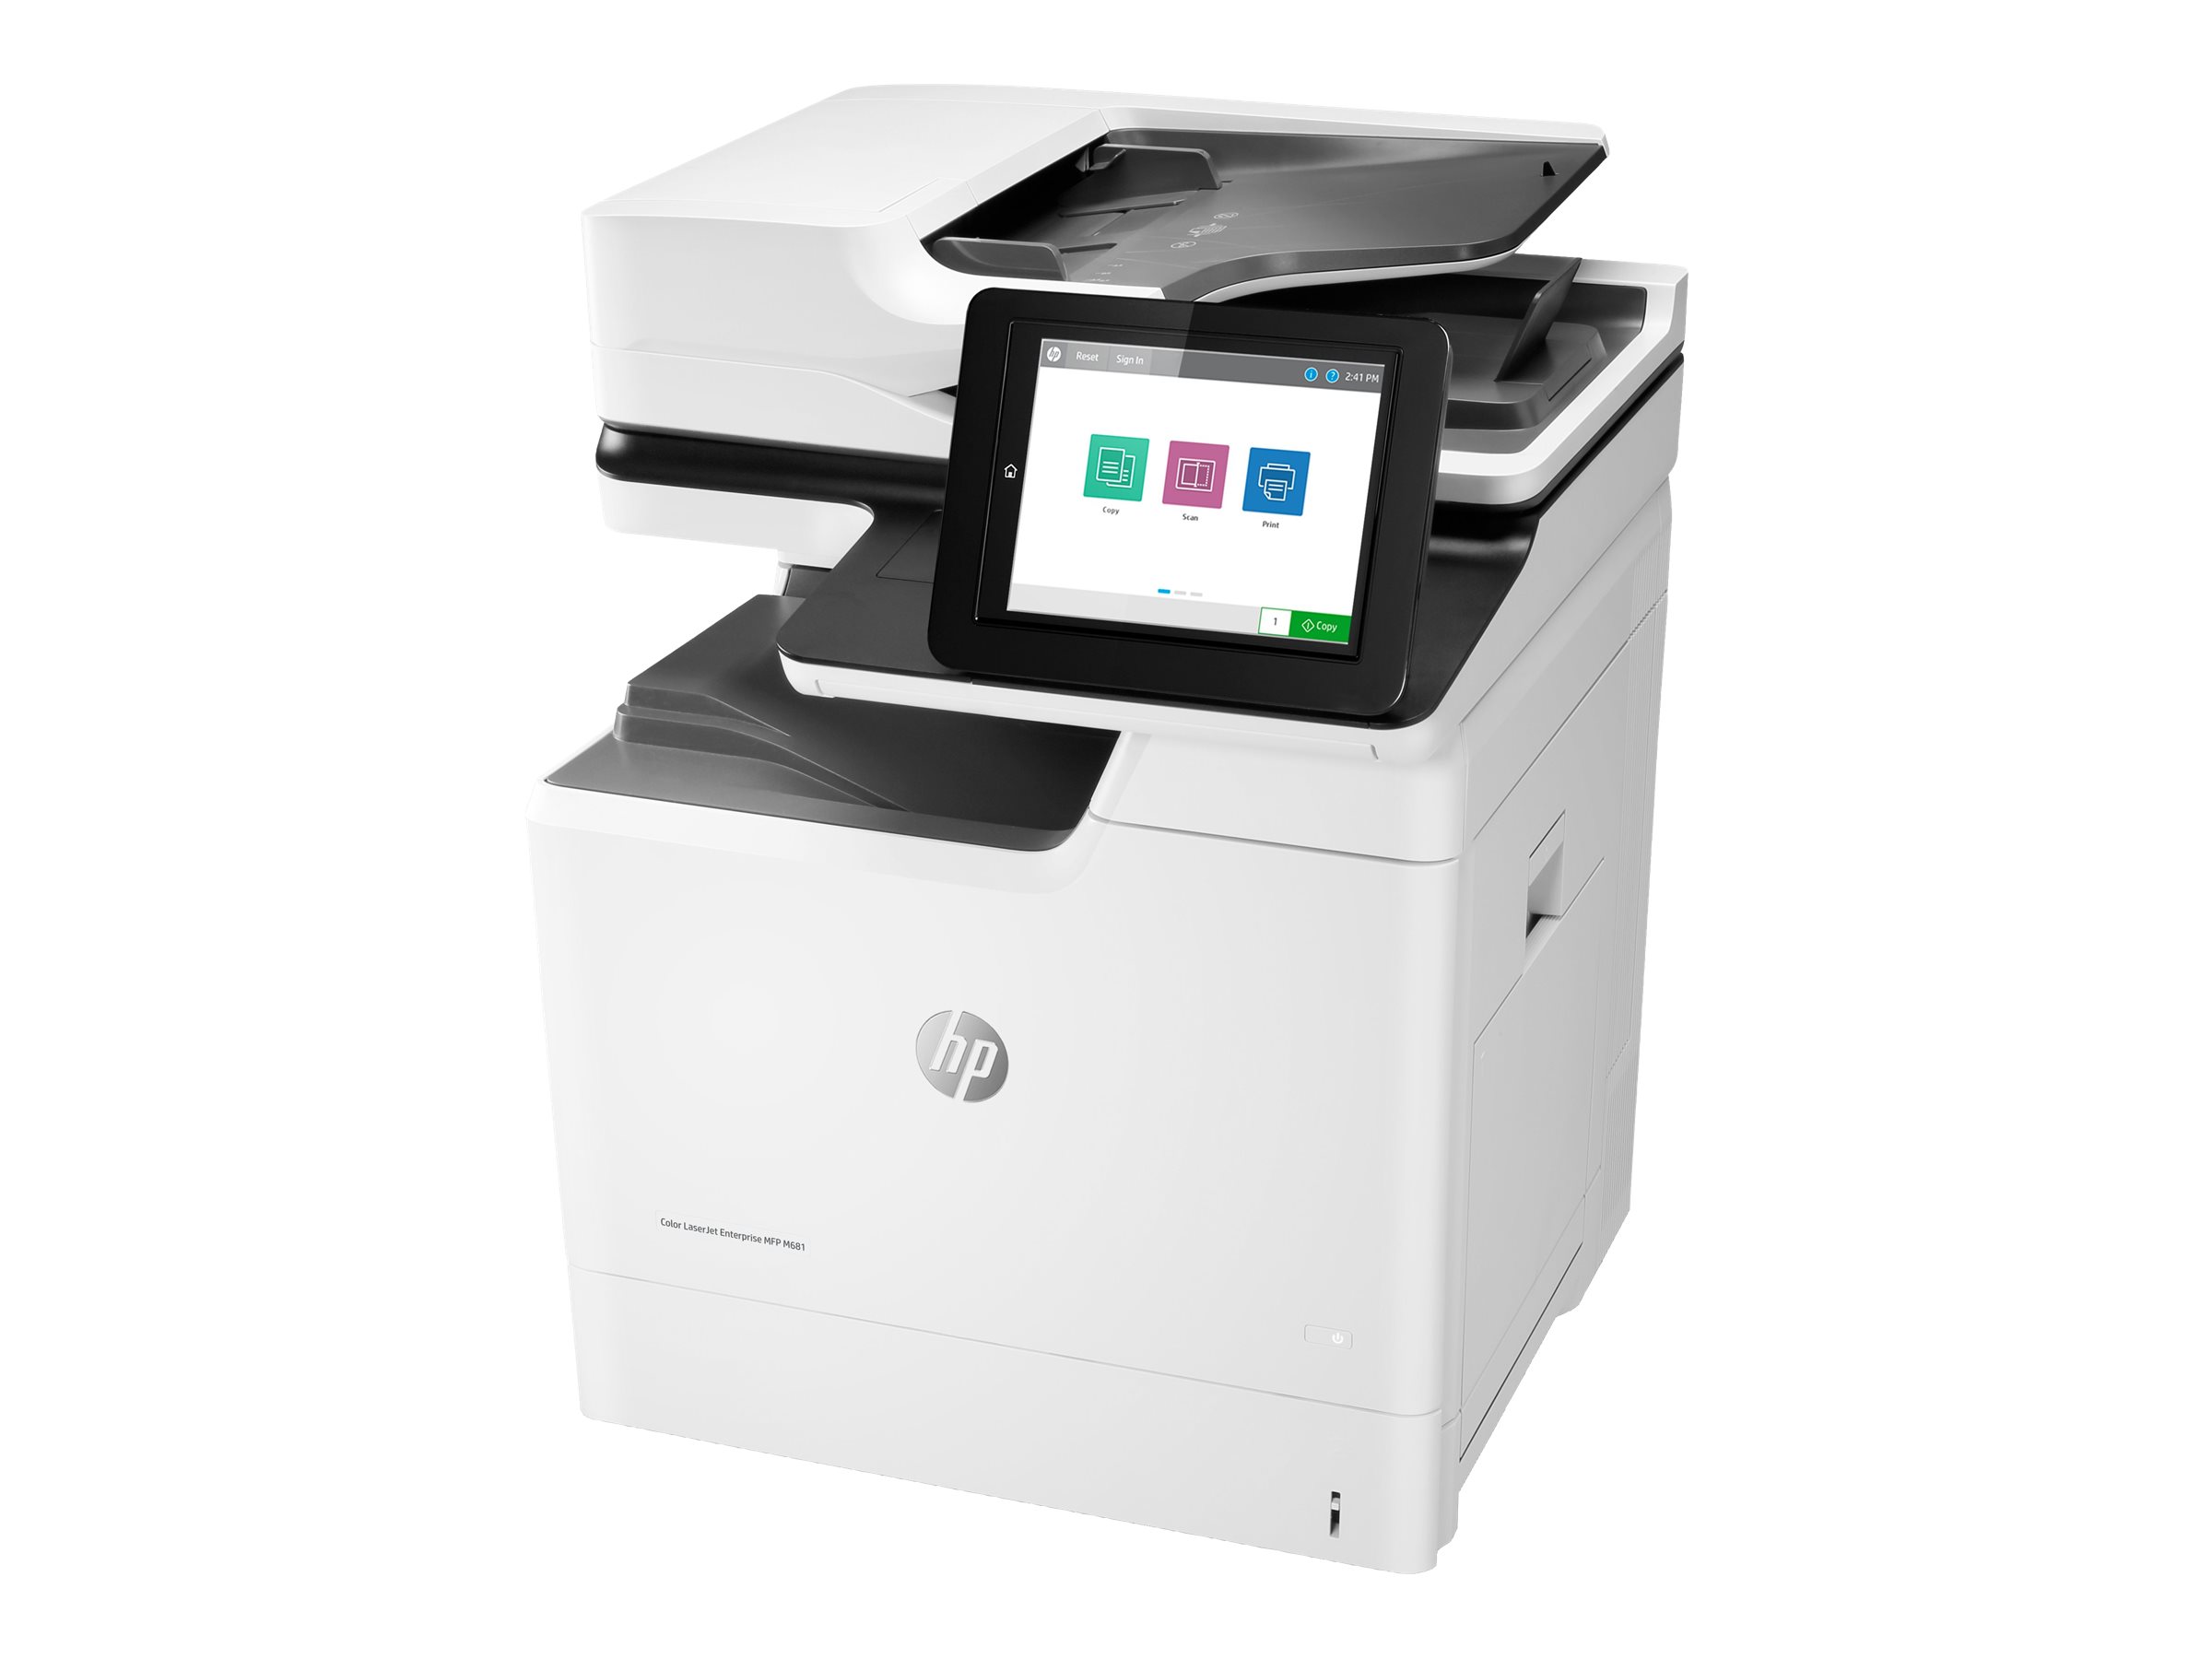 PageWide Enterprise Color MFP 780 Printer series